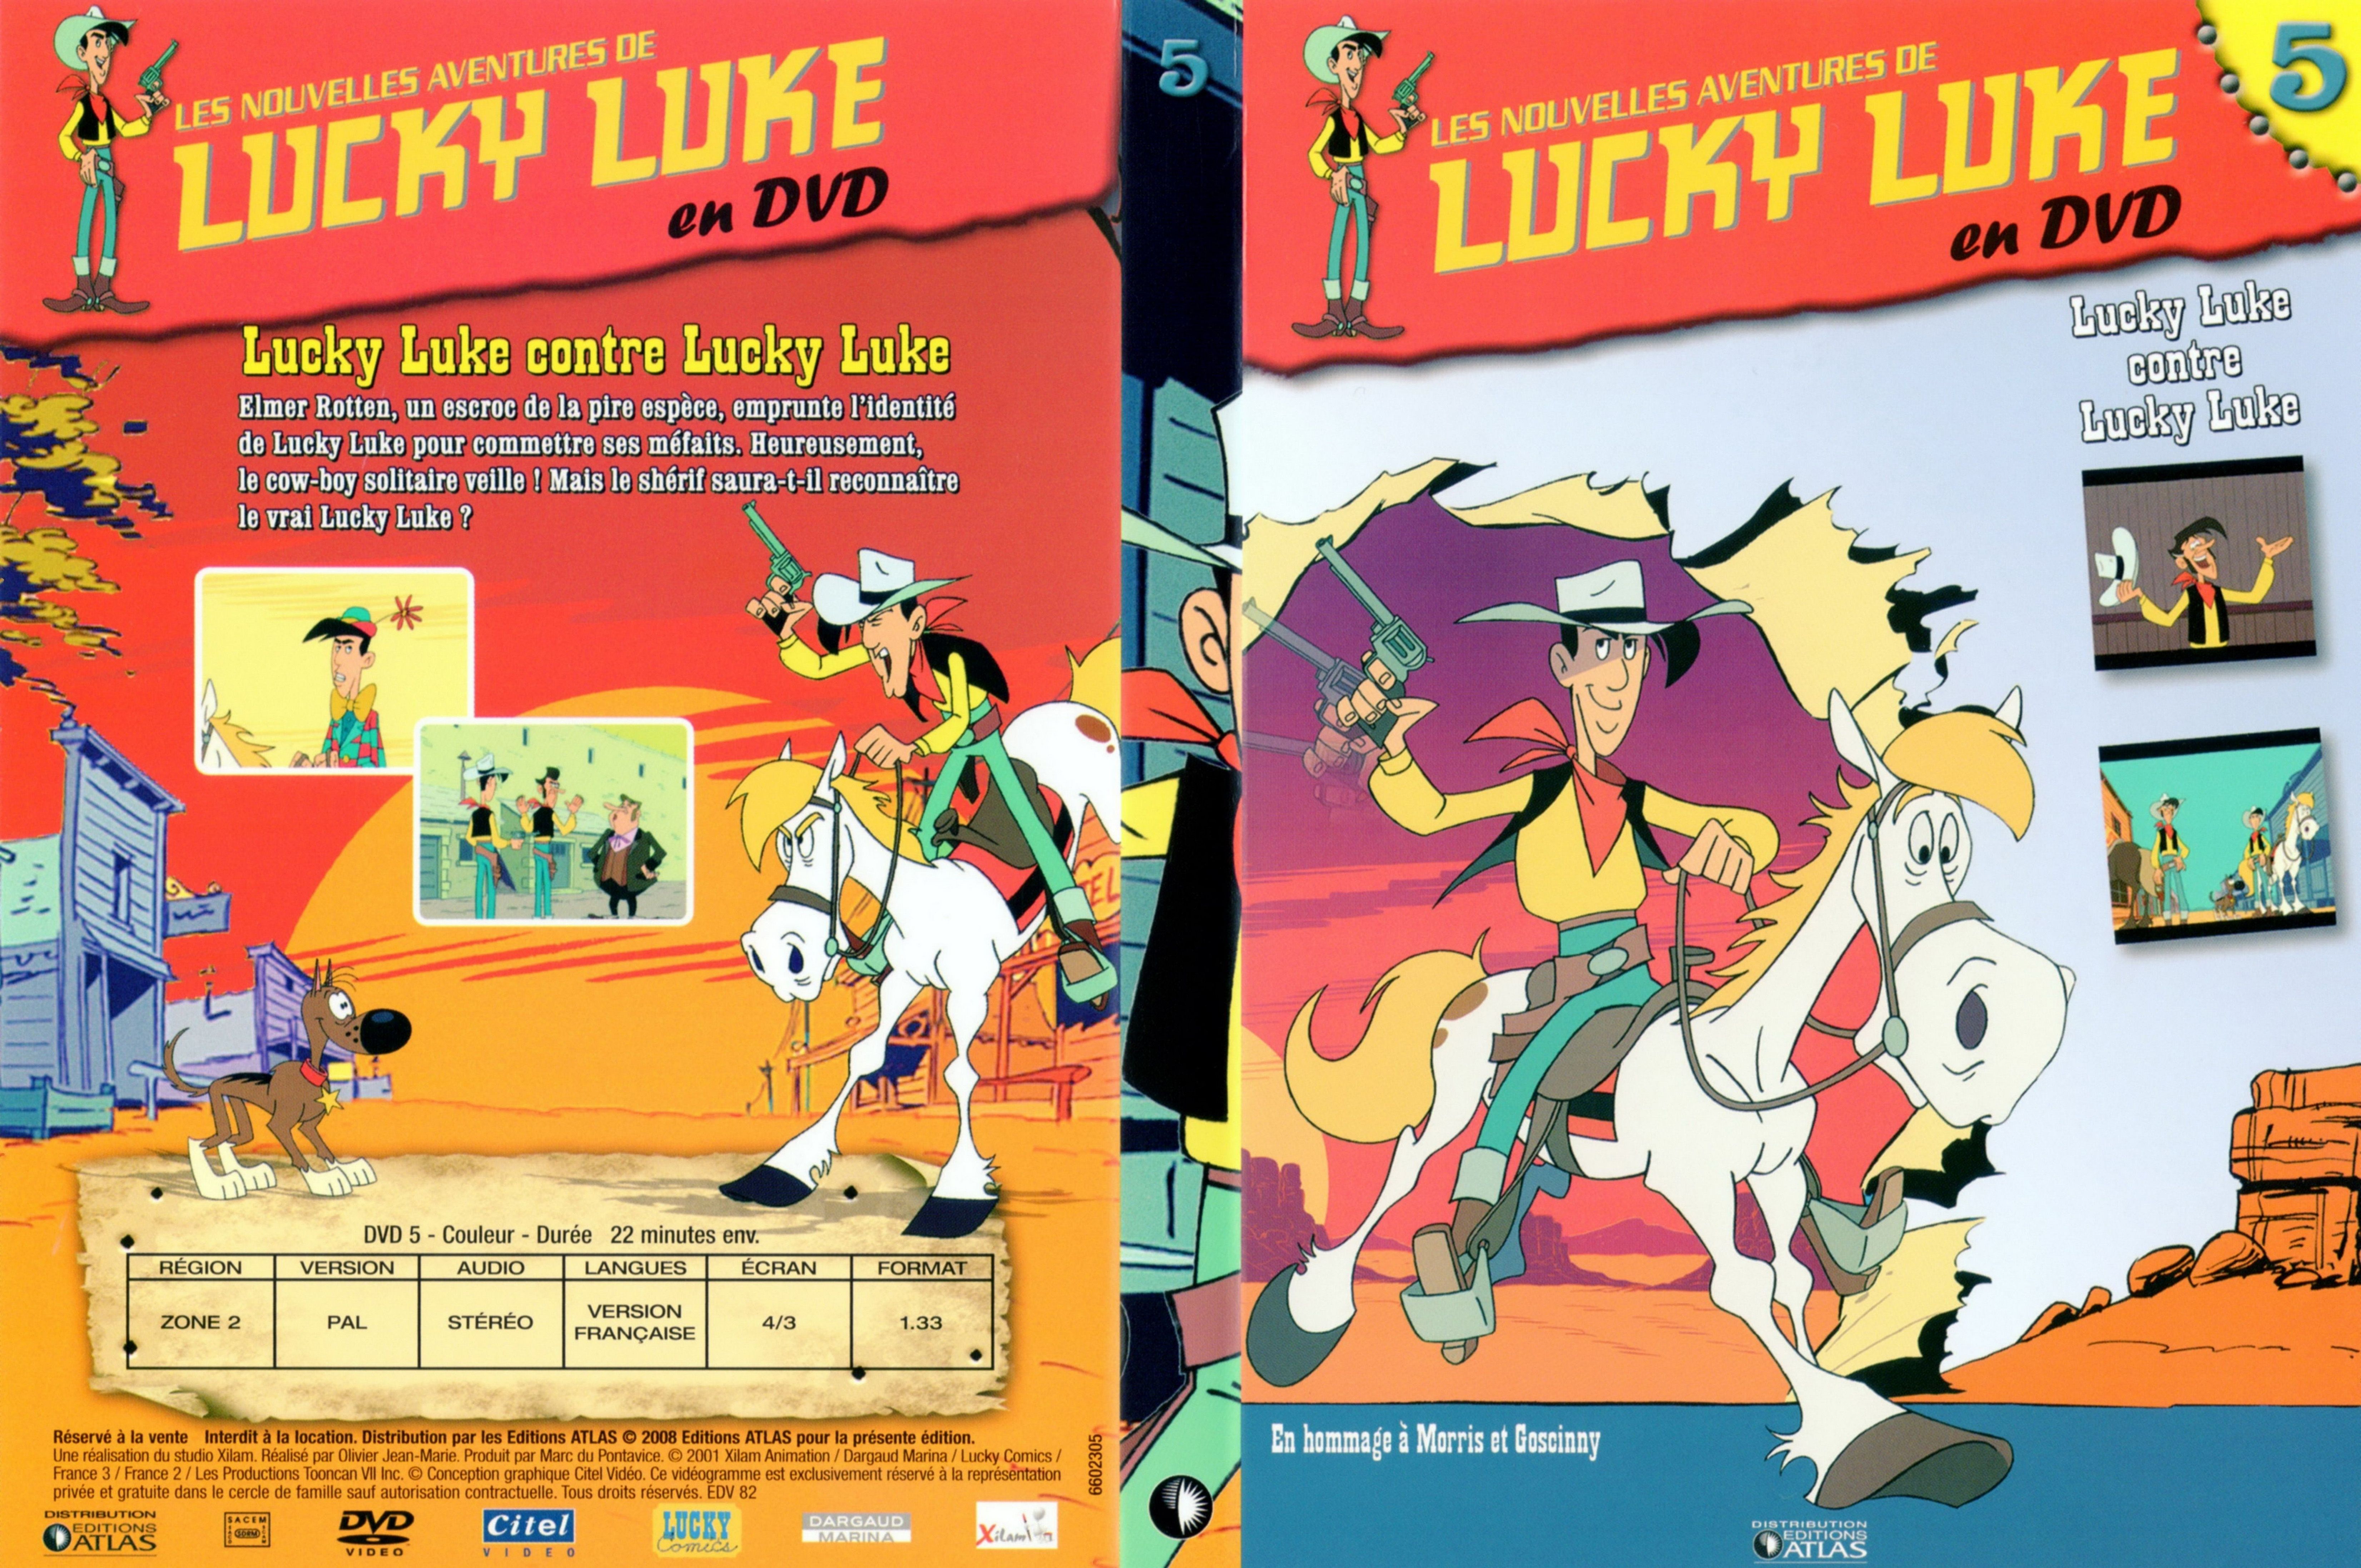 Jaquette DVD Lucky Luke en DVD vol 05